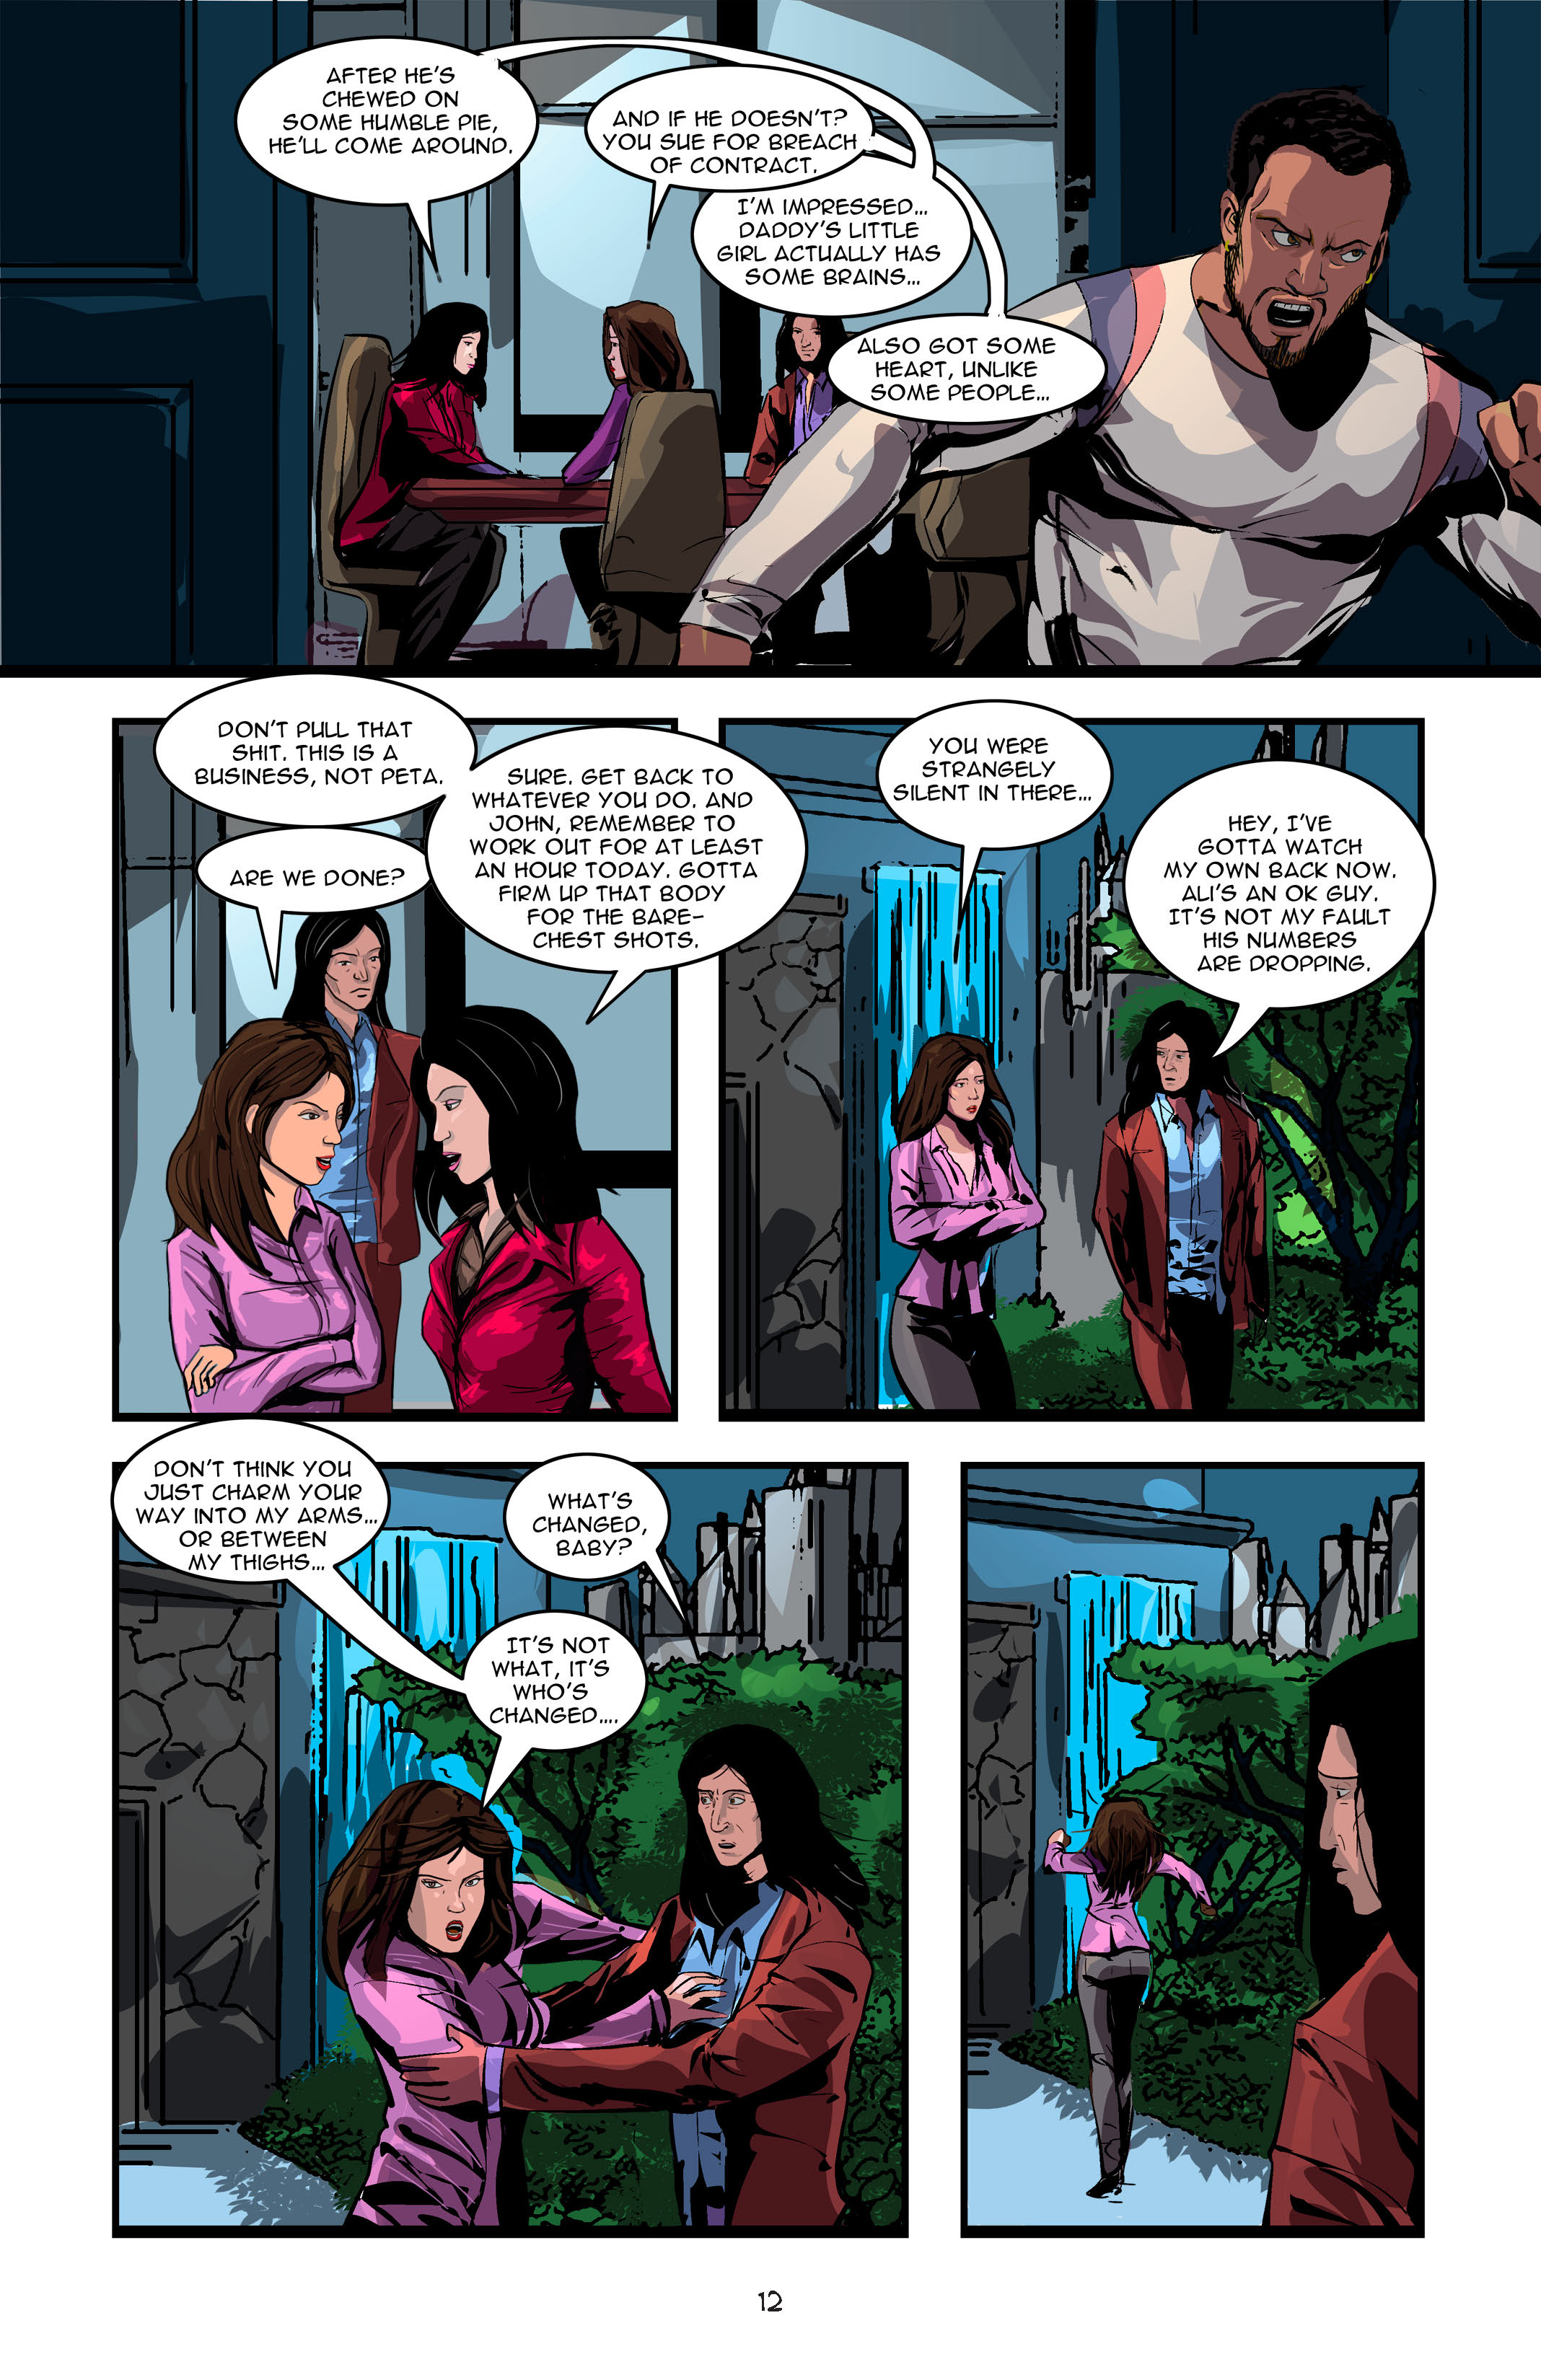 Dreamsinger Episode 2 Print final_Page_14